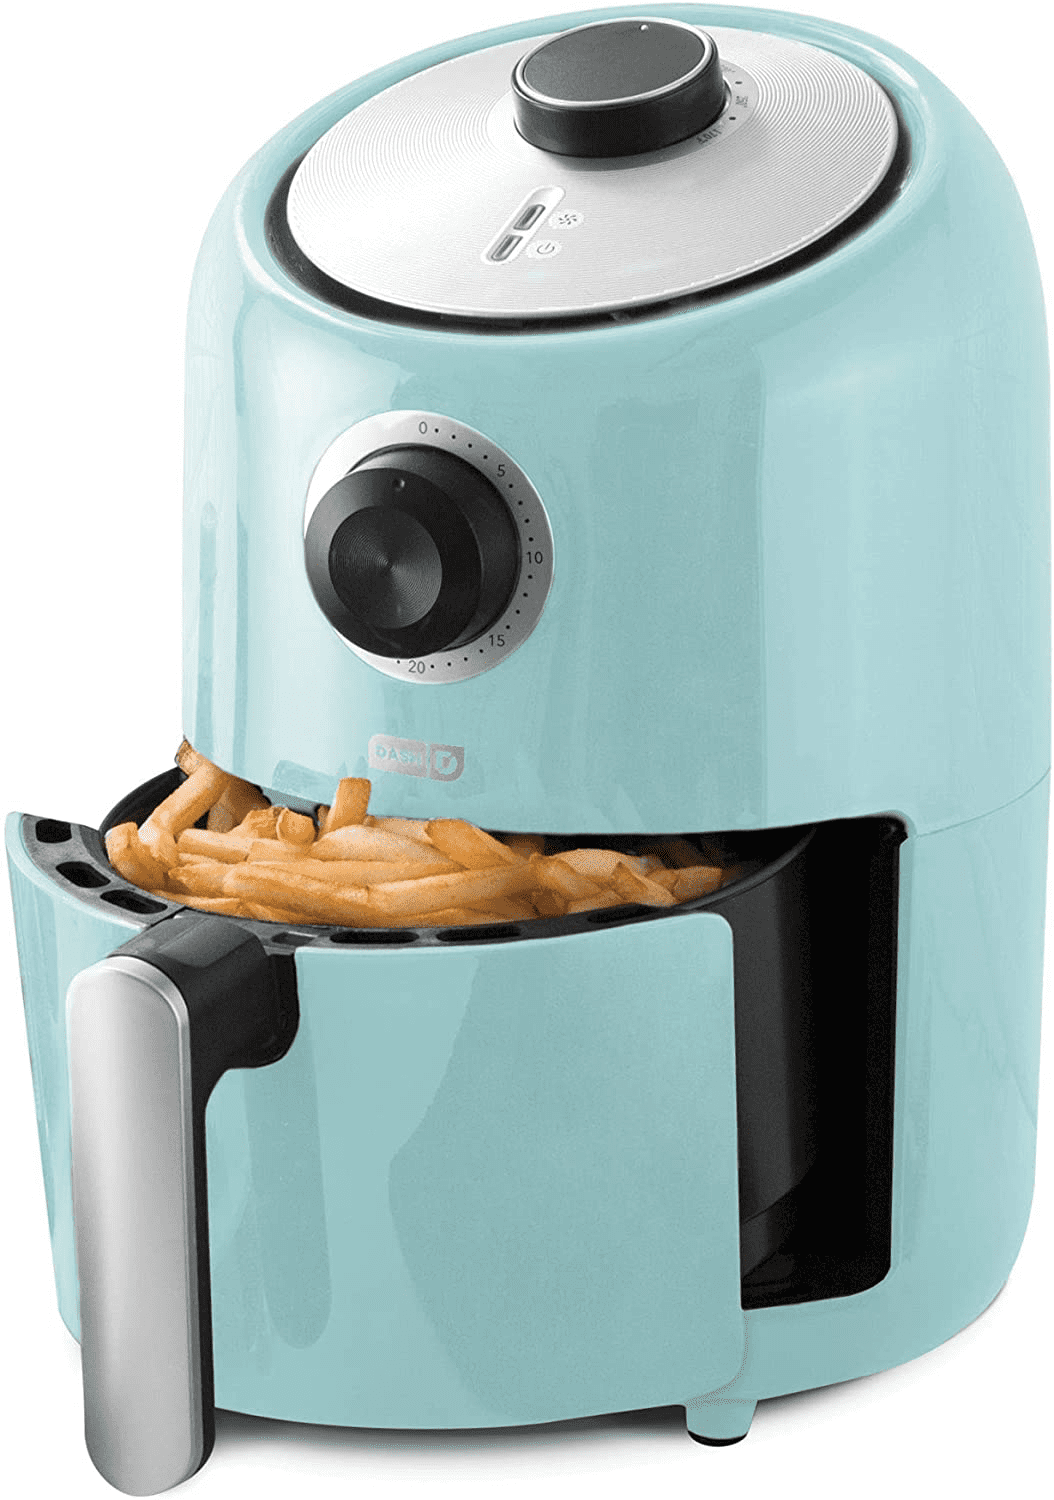 Dash Deluxe Electric Air Fryer + Oven Cooker With Temperature Control, Non  Stick Fry Basket, Recipe Guide + Auto Shut Off Feature, 6 Qt, Aqua